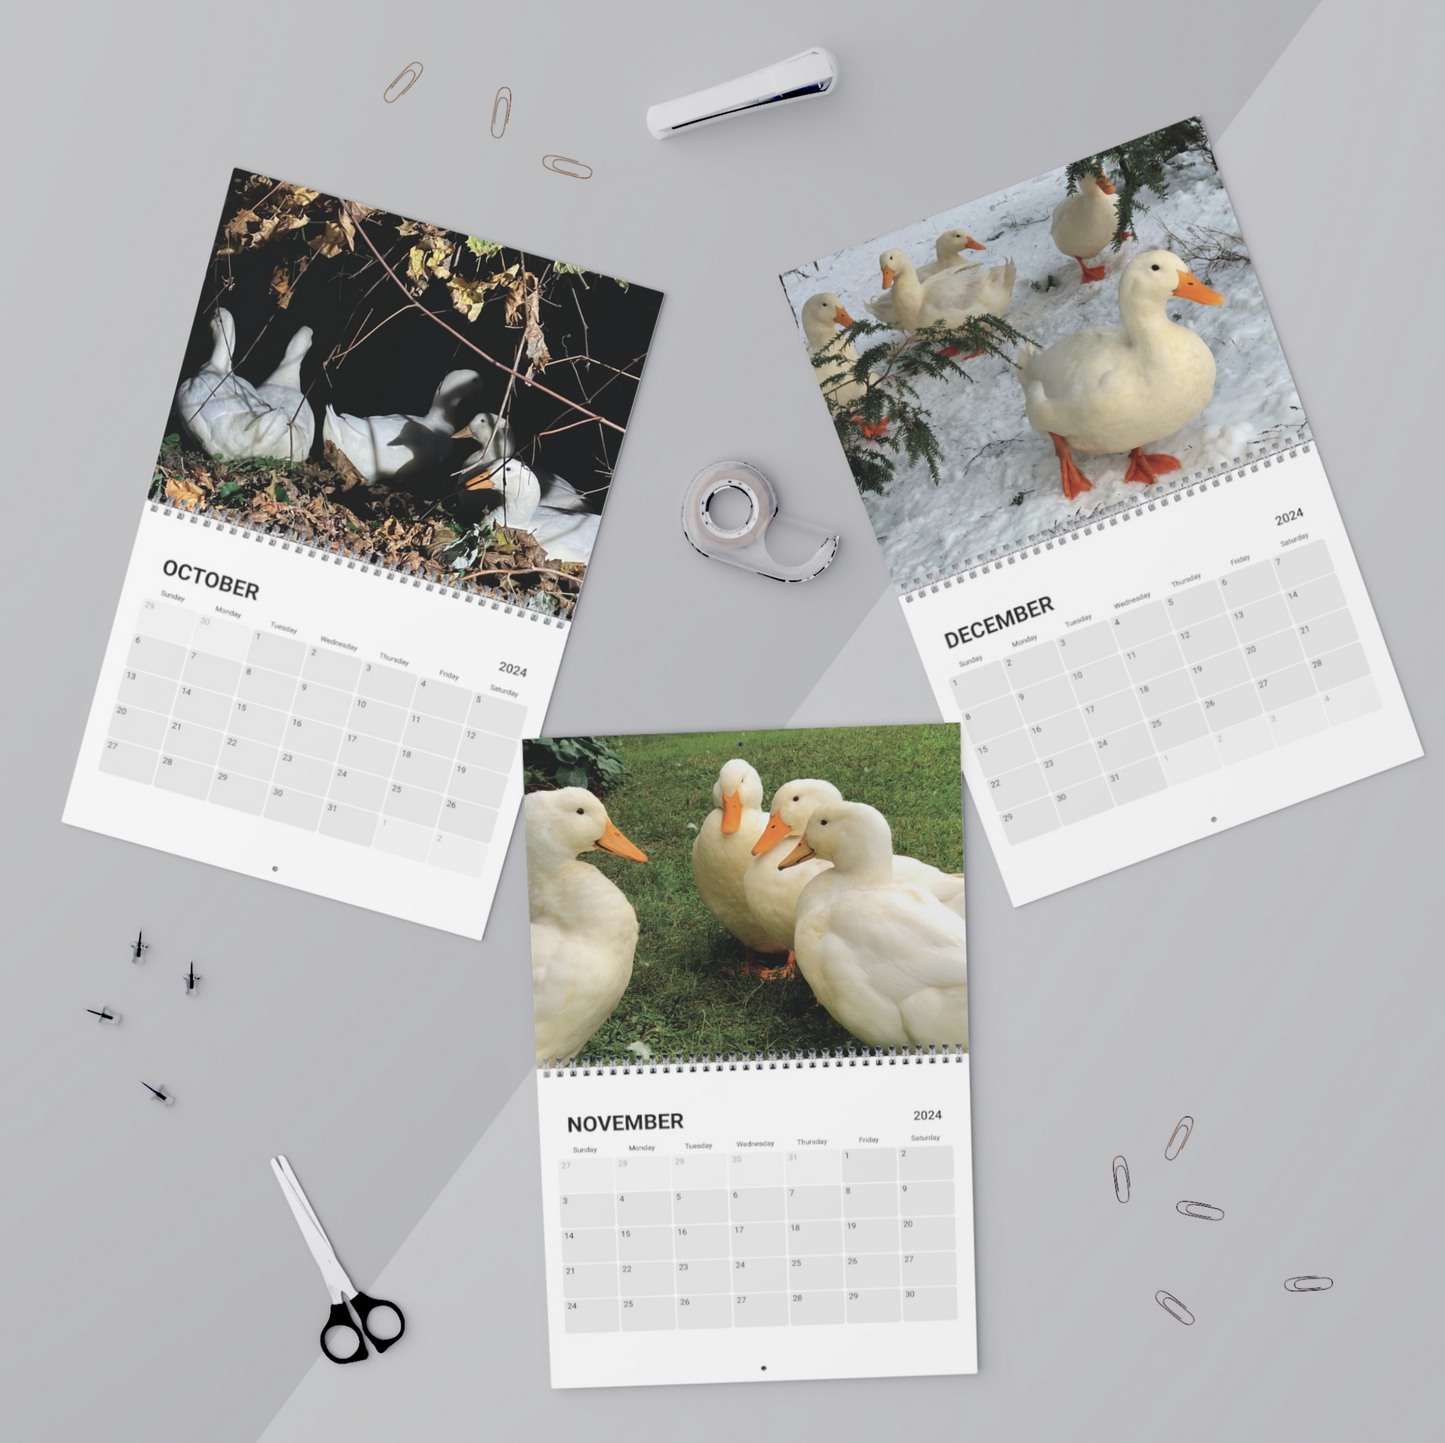 Backyard Ducks 2024 Wall Calendar